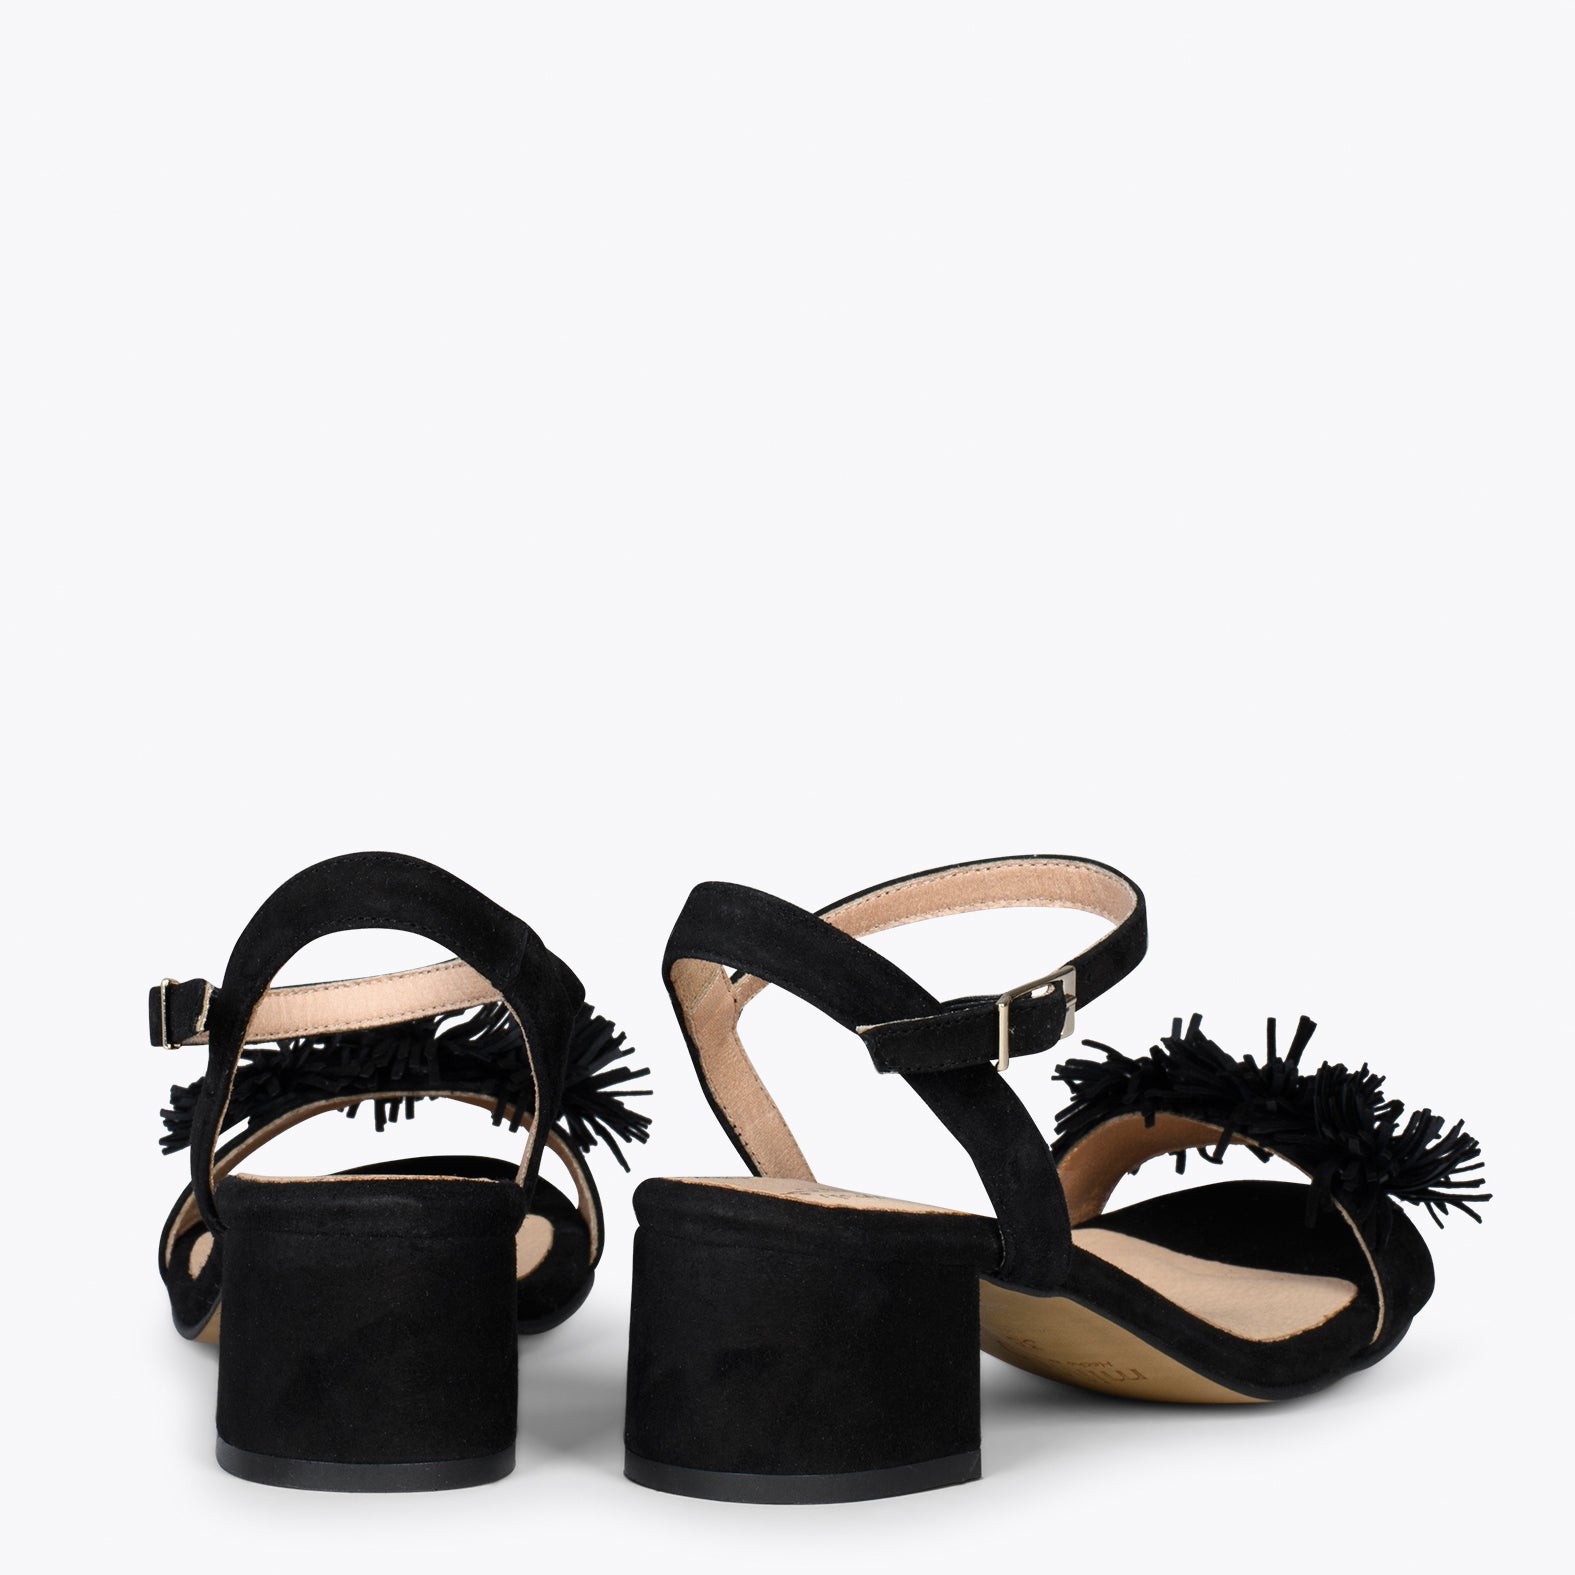 ZINNIA – BLACK sandals with pompom details